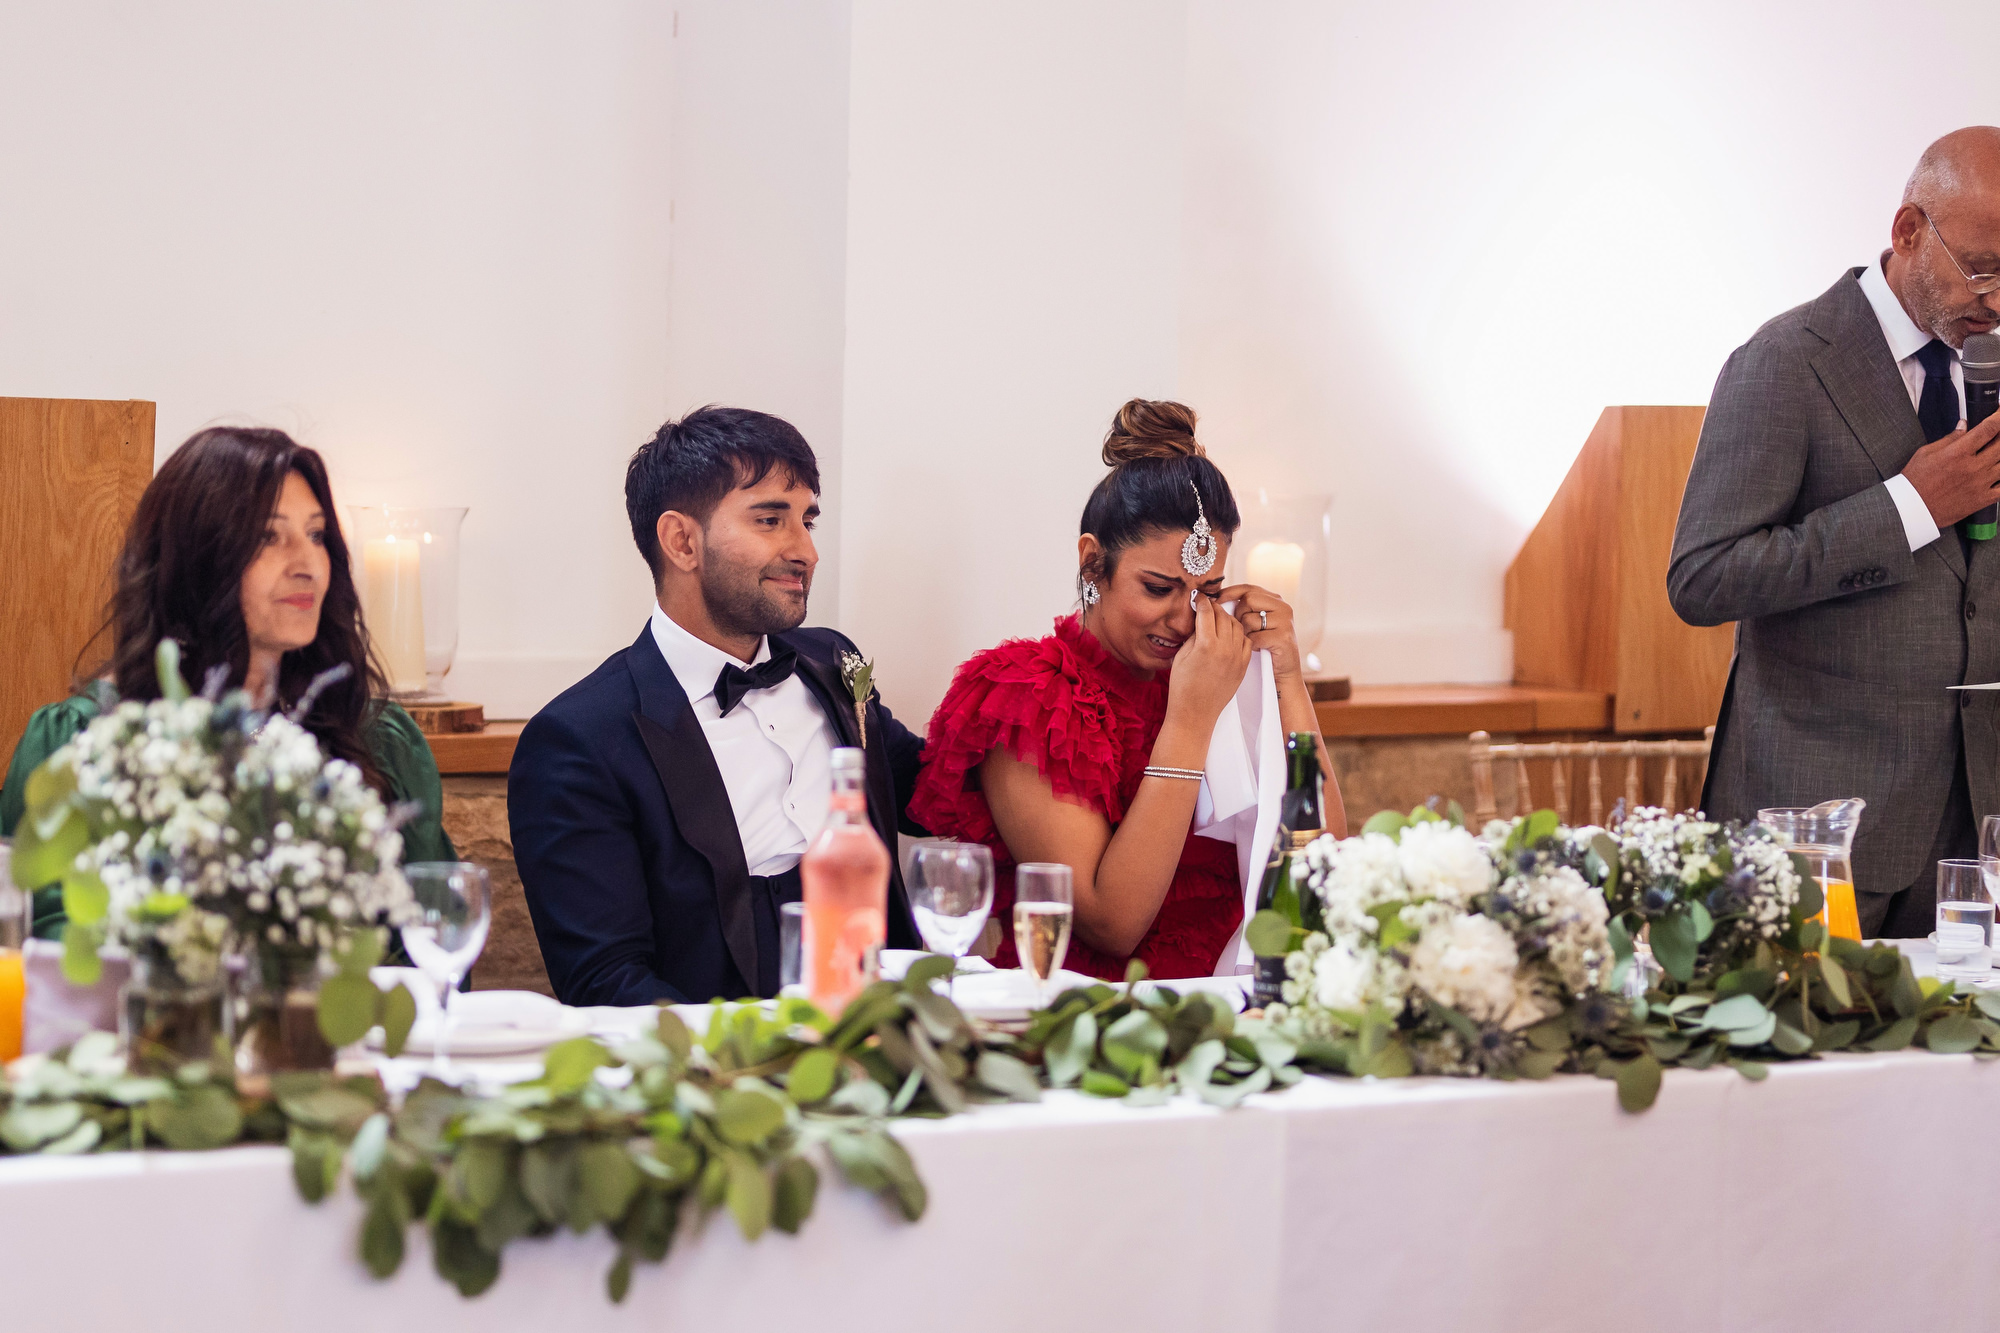 Civil Ceremony, Worton Hall, Oxford, wedding reception, speeches